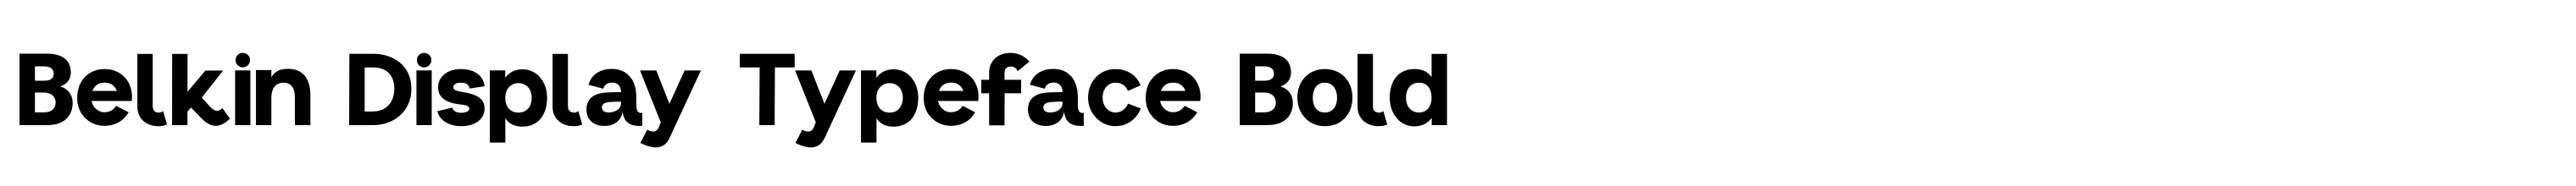 Belkin Display Typeface Bold